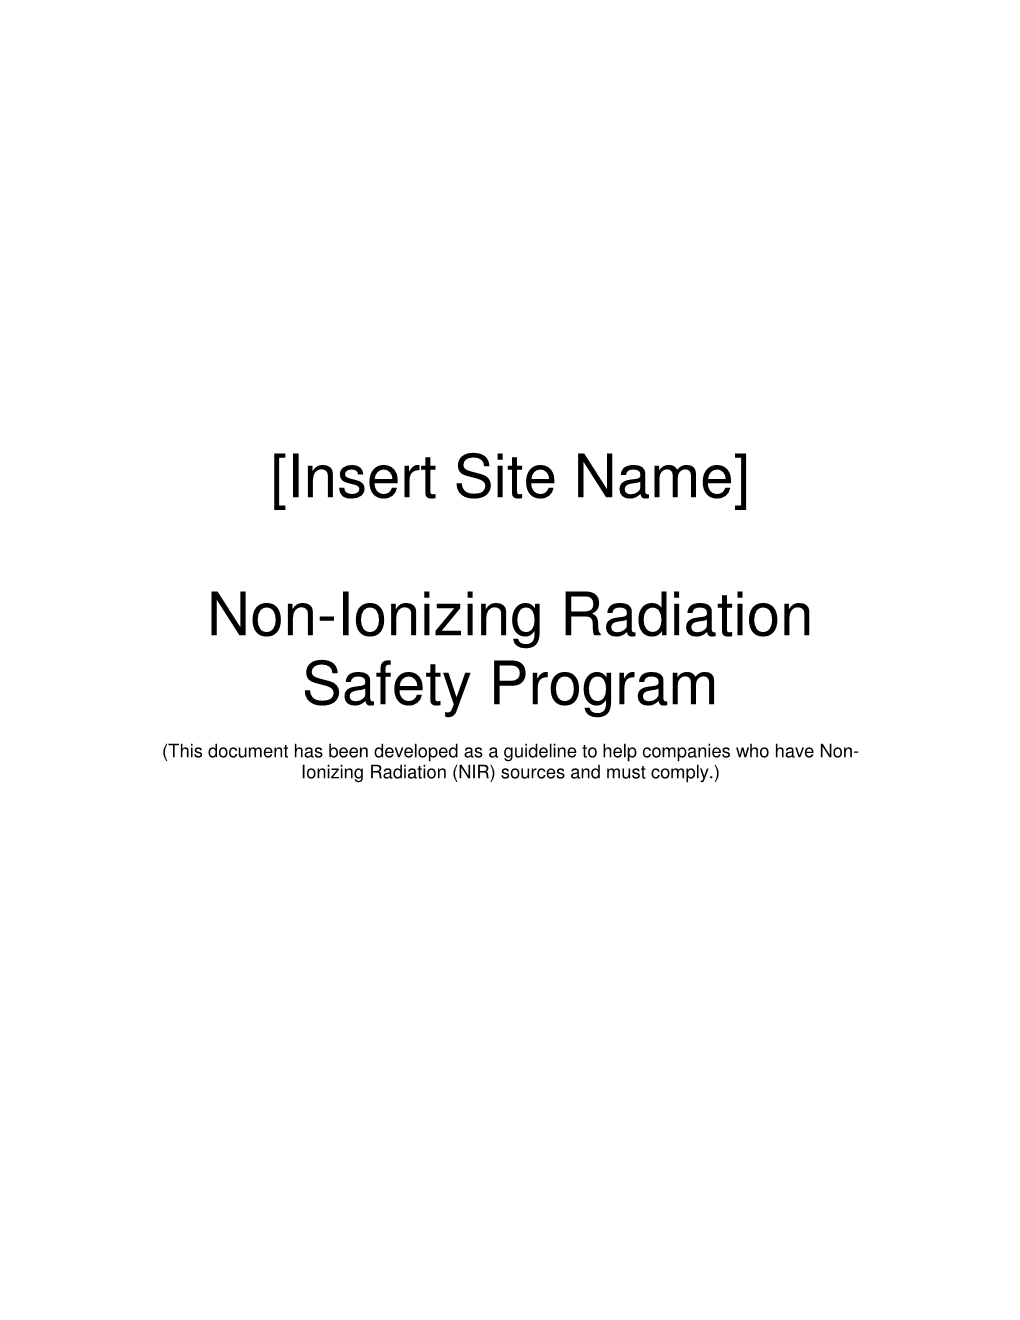 [Insert Site Name] Non-Ionizing Radiation Safety Program